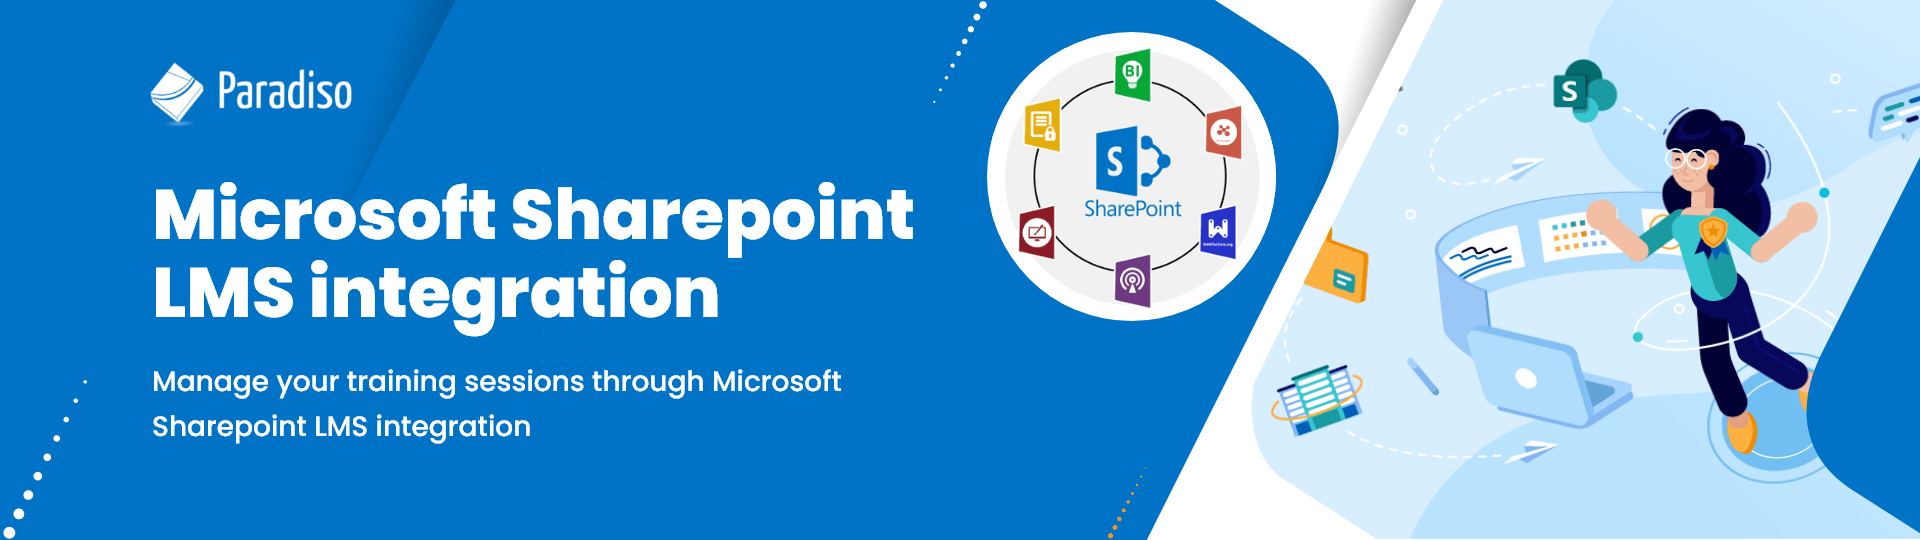 Microsoft Sharepoint LMS integration